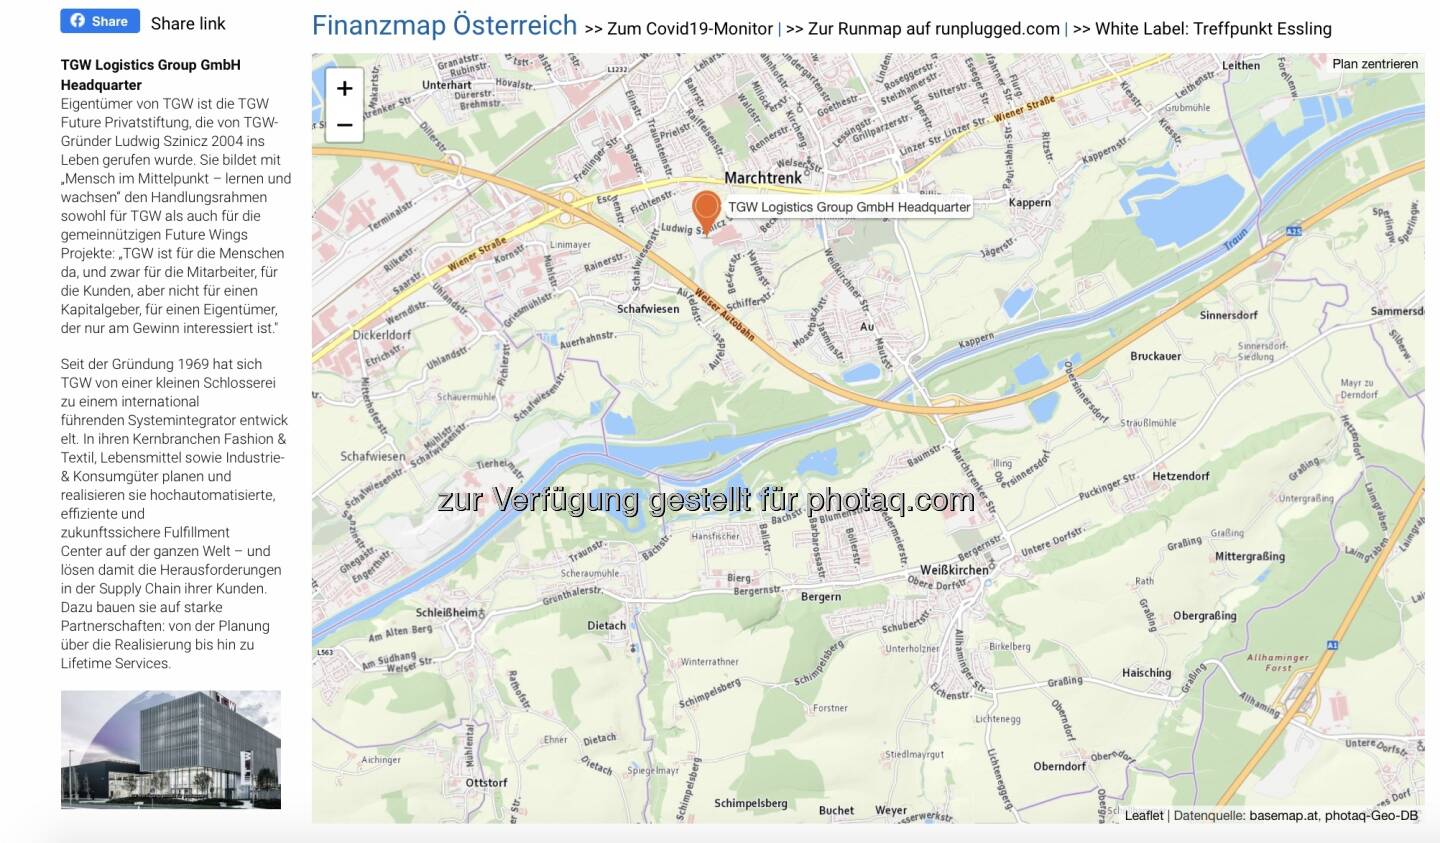 TGW Logistics Group GmbH Headquarter auf http://www.boerse-social.com/finanzmap